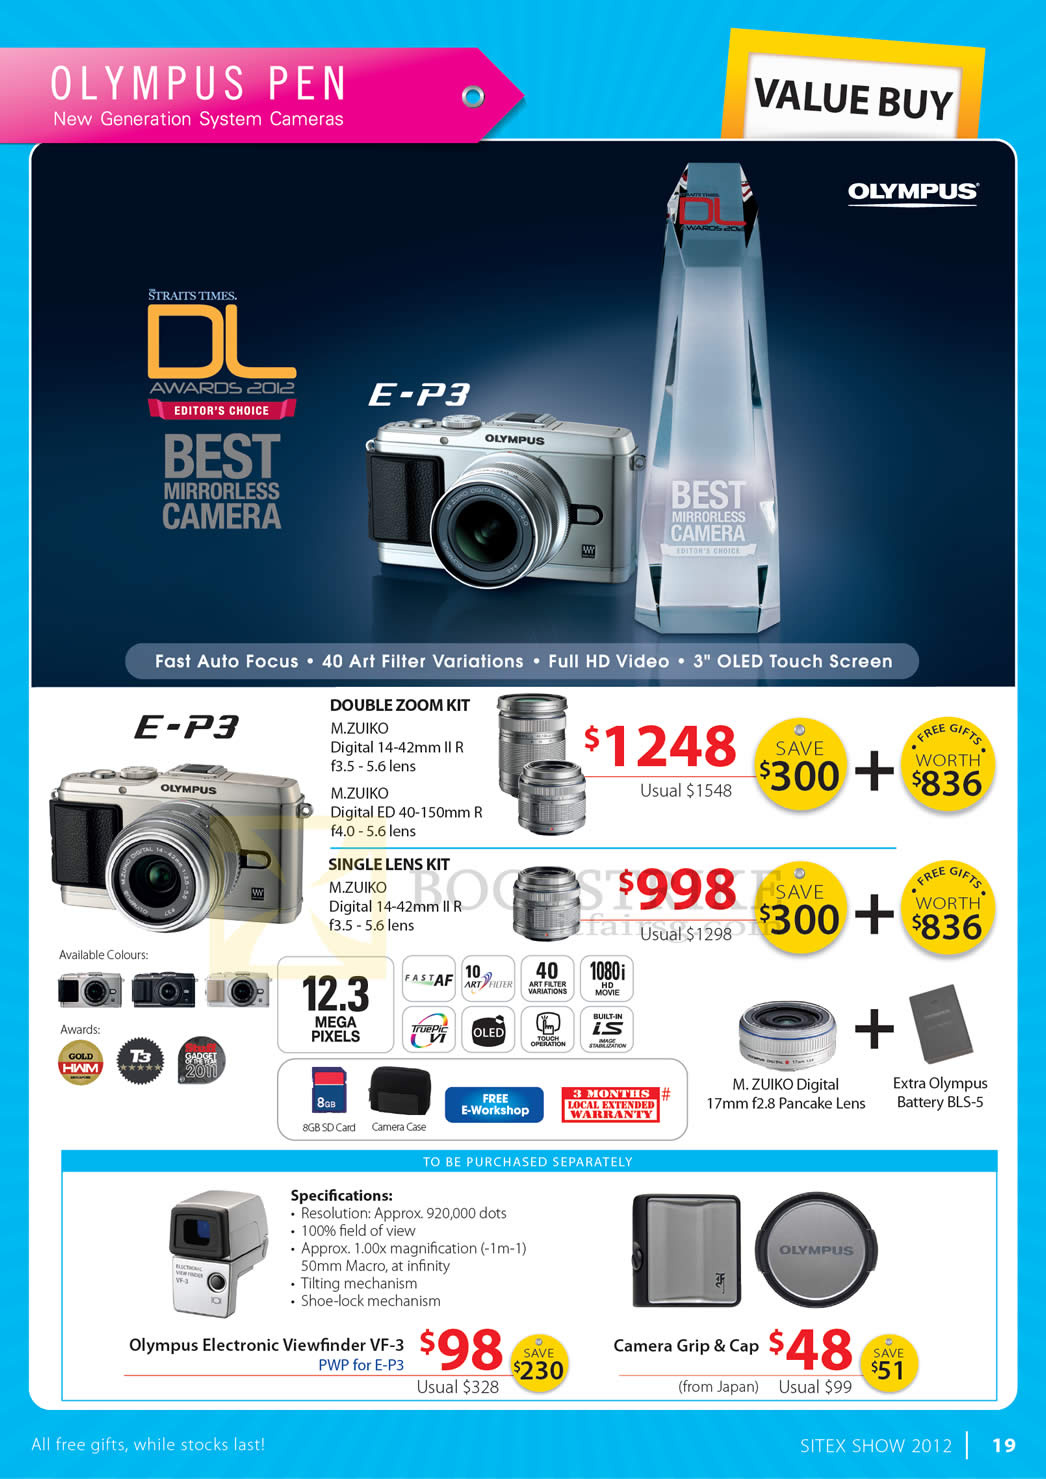 SITEX 2012 price list image brochure of Olympus Digital Camera Pen E-P3, Specifications, Double Zoom Kit, Single Lens Kit, Camera Grip, Cap